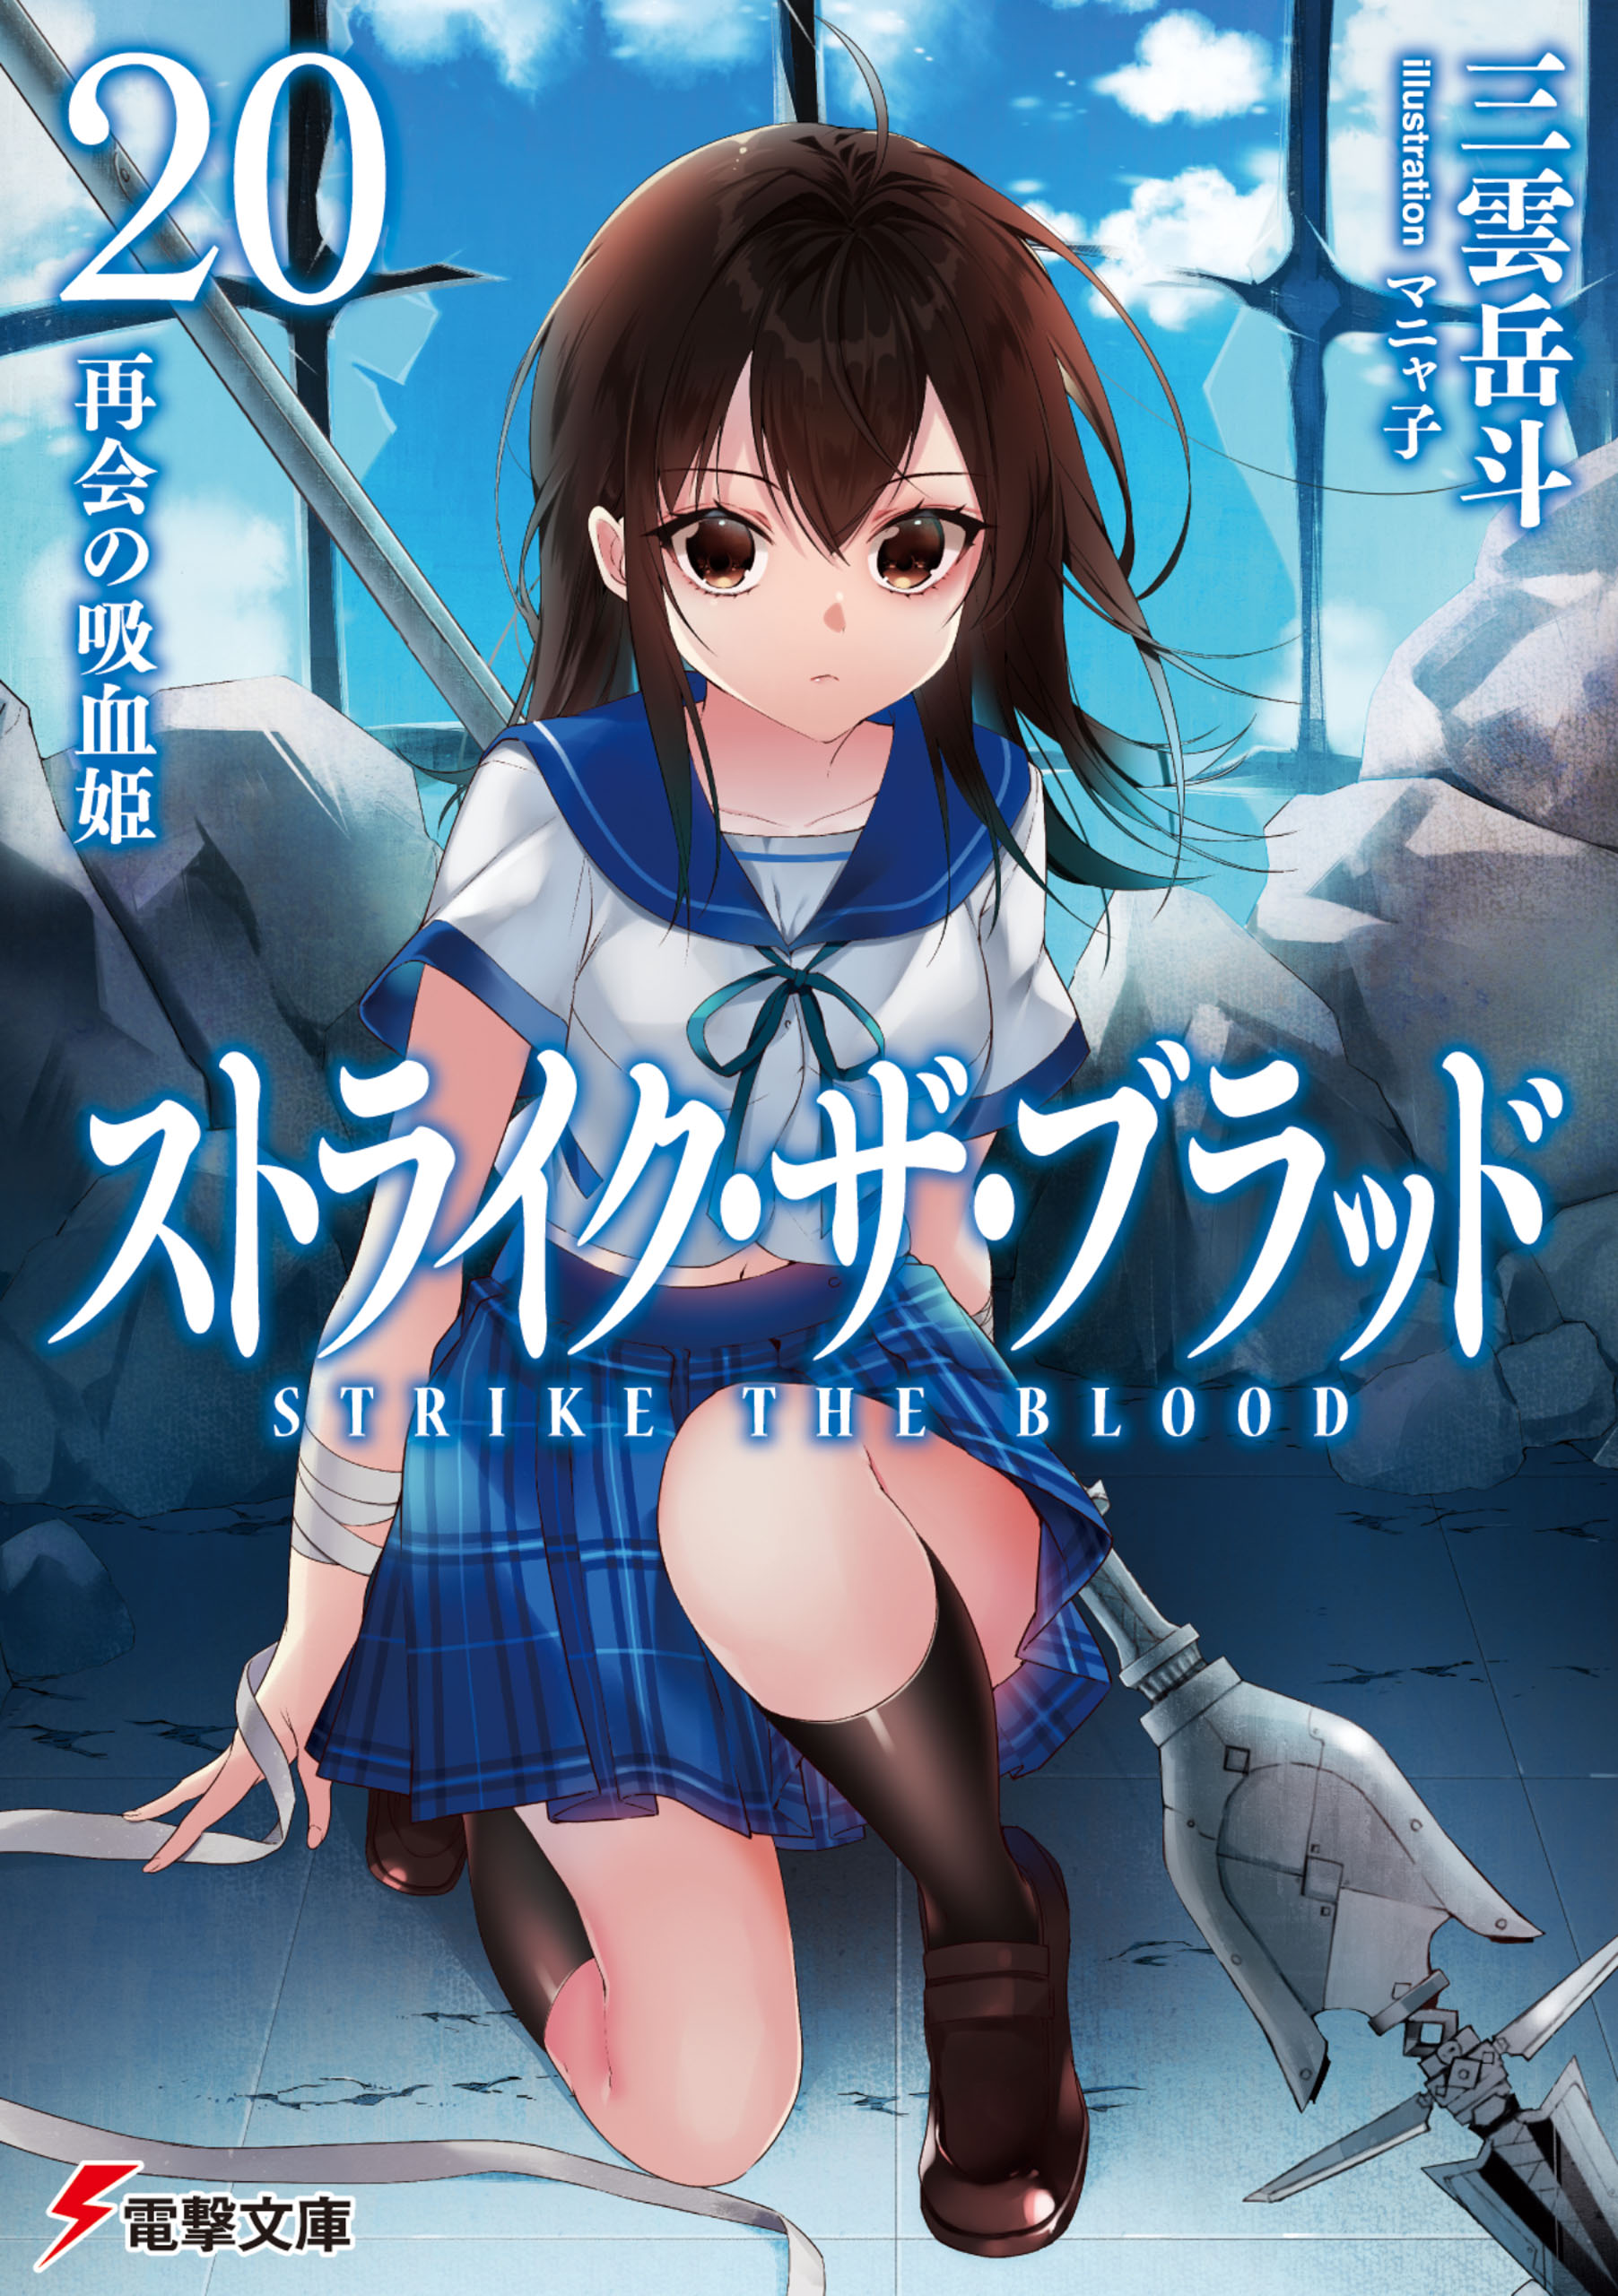 Light Novel Volume 15, Strike The Blood Wiki, Fandom